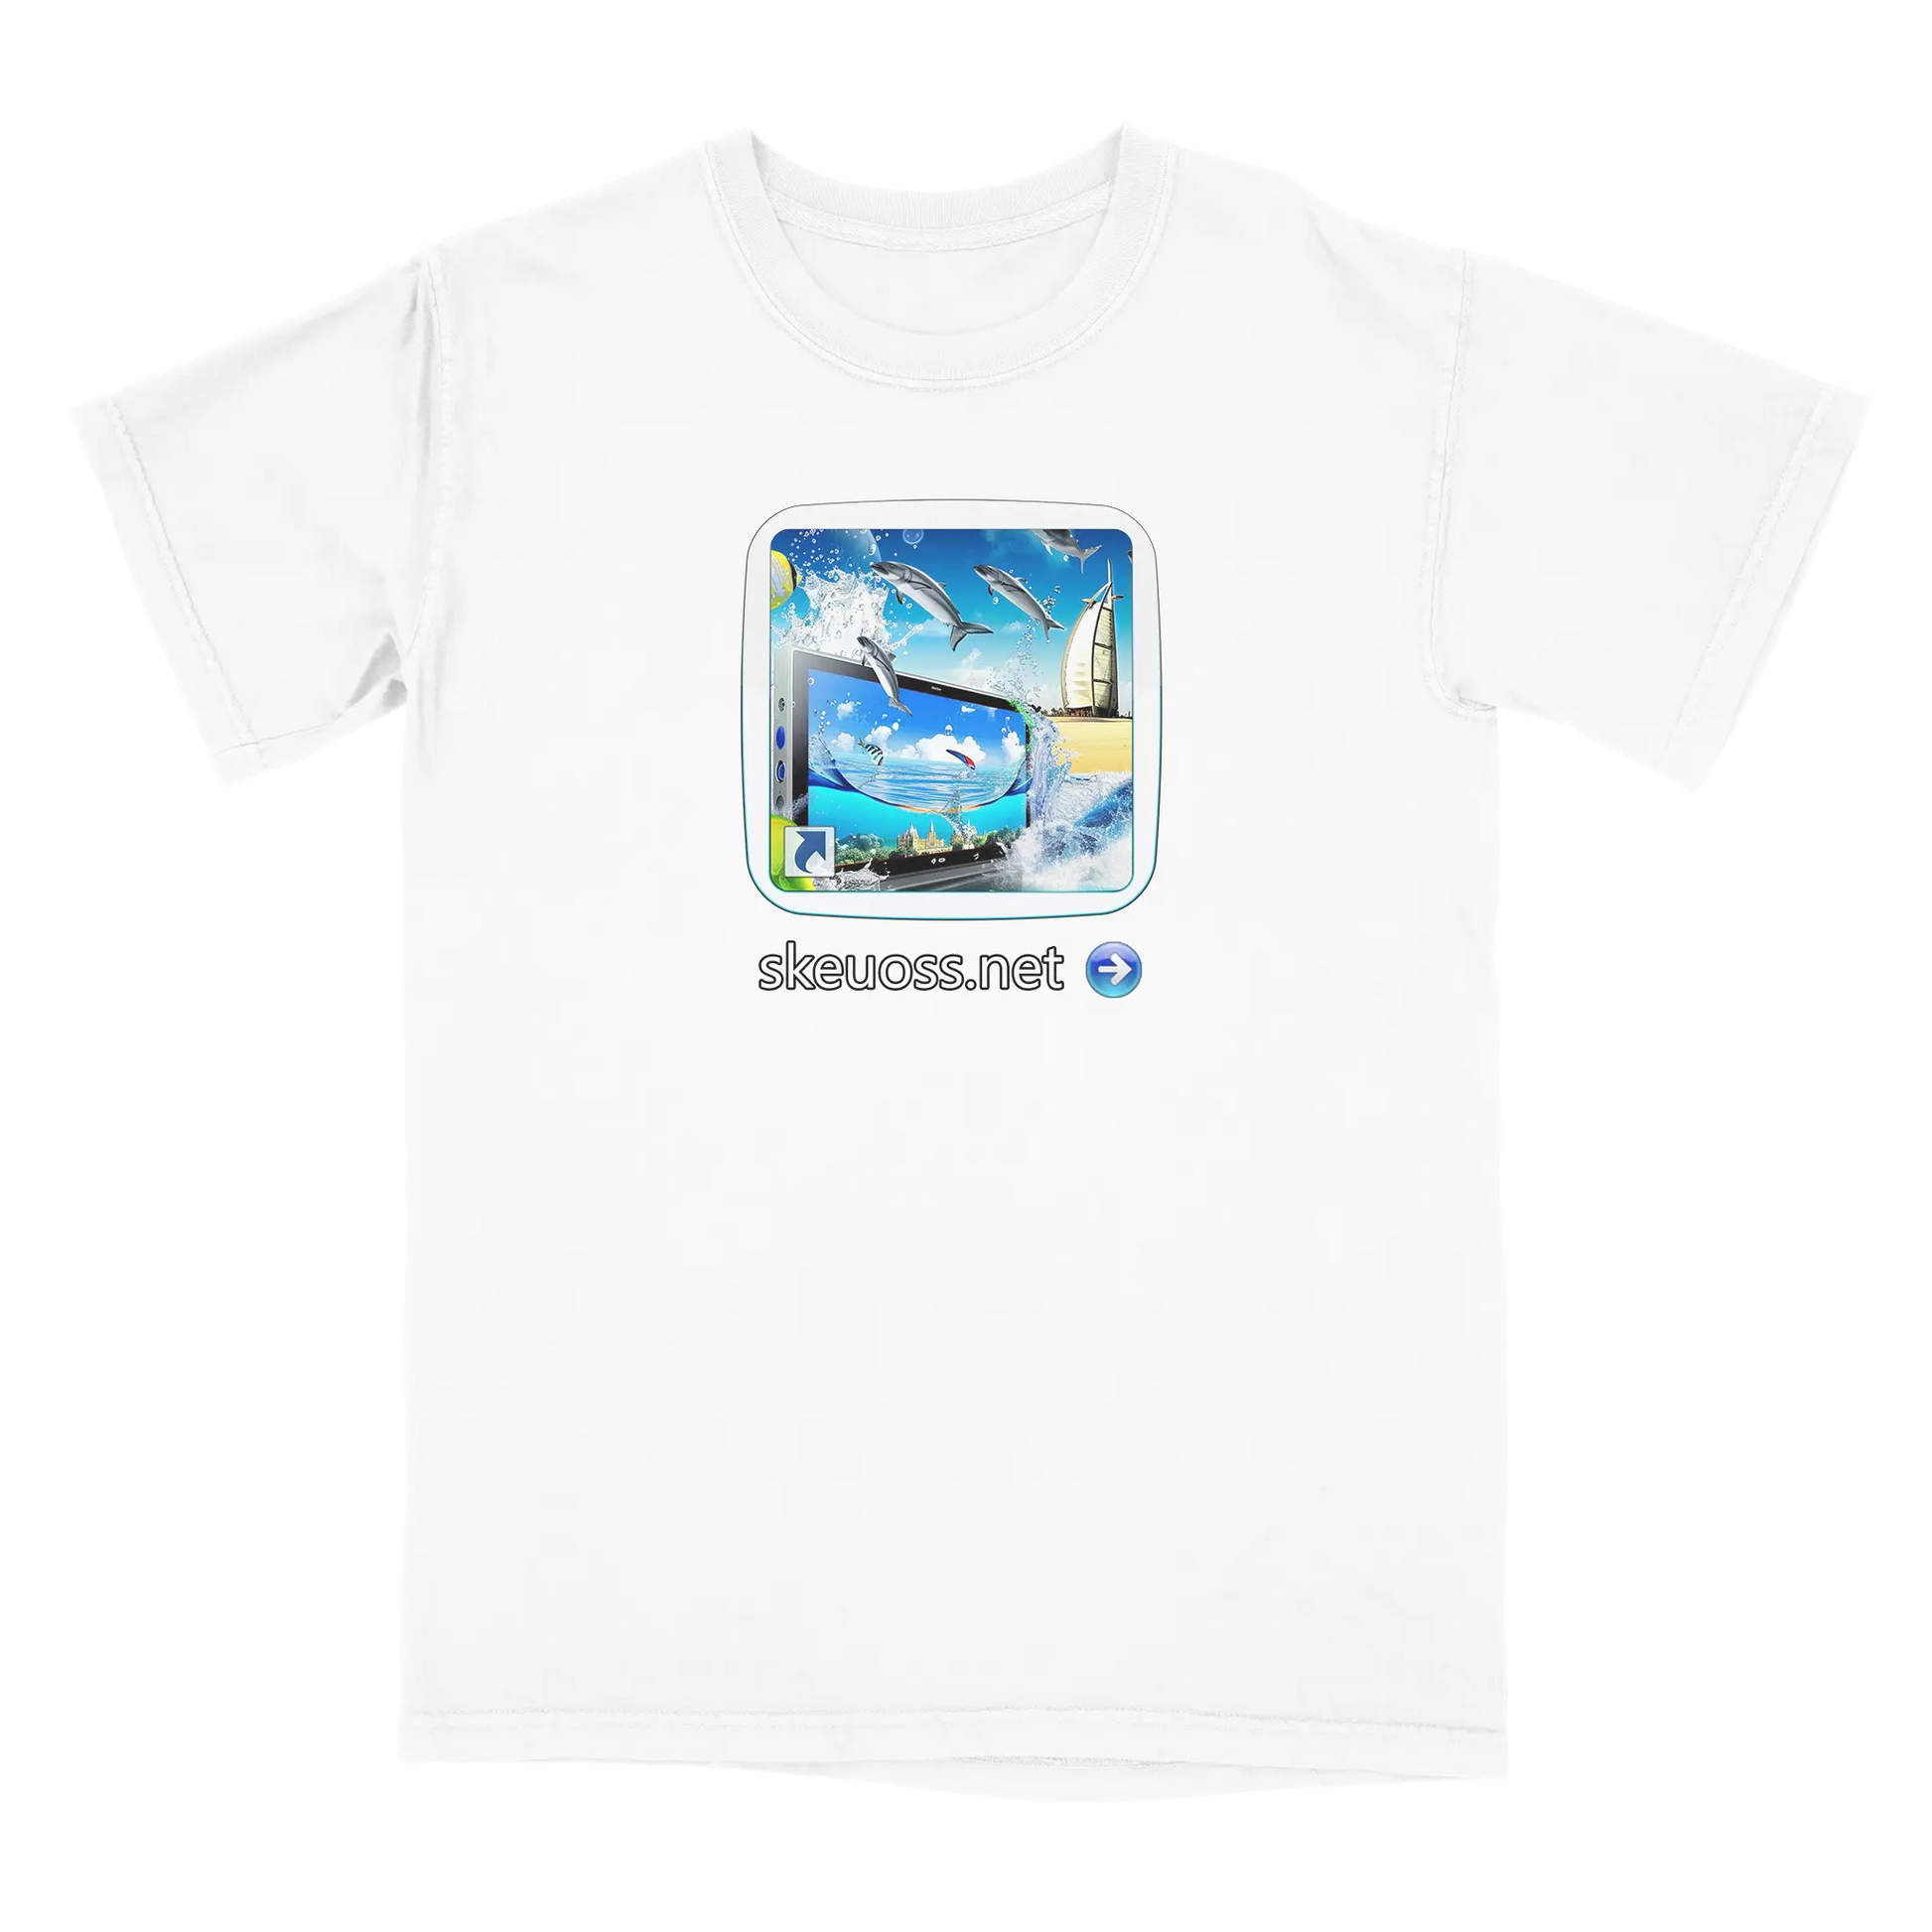 Frutiger Aero T-shirt - User Login Collection - User 283